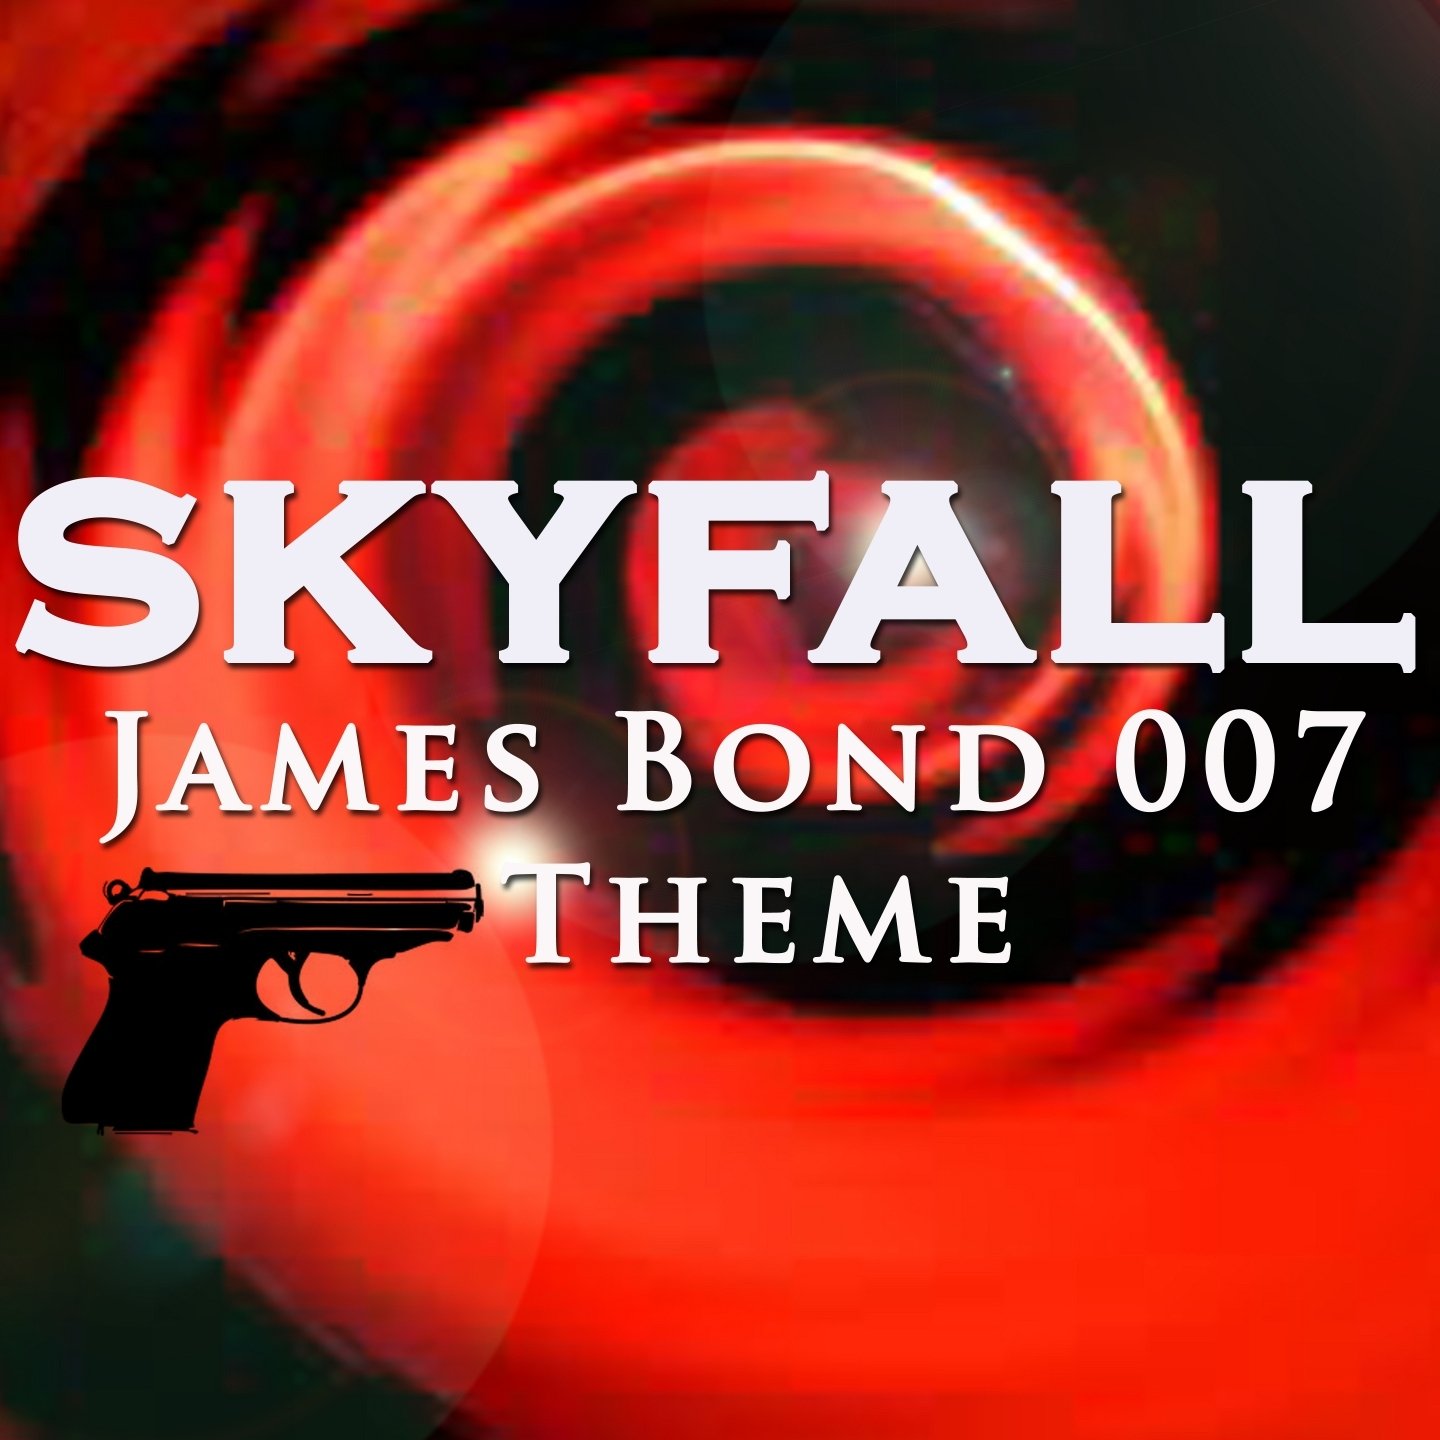 Only hits. 007 Skyfall песня. Минусовка Skyfall.